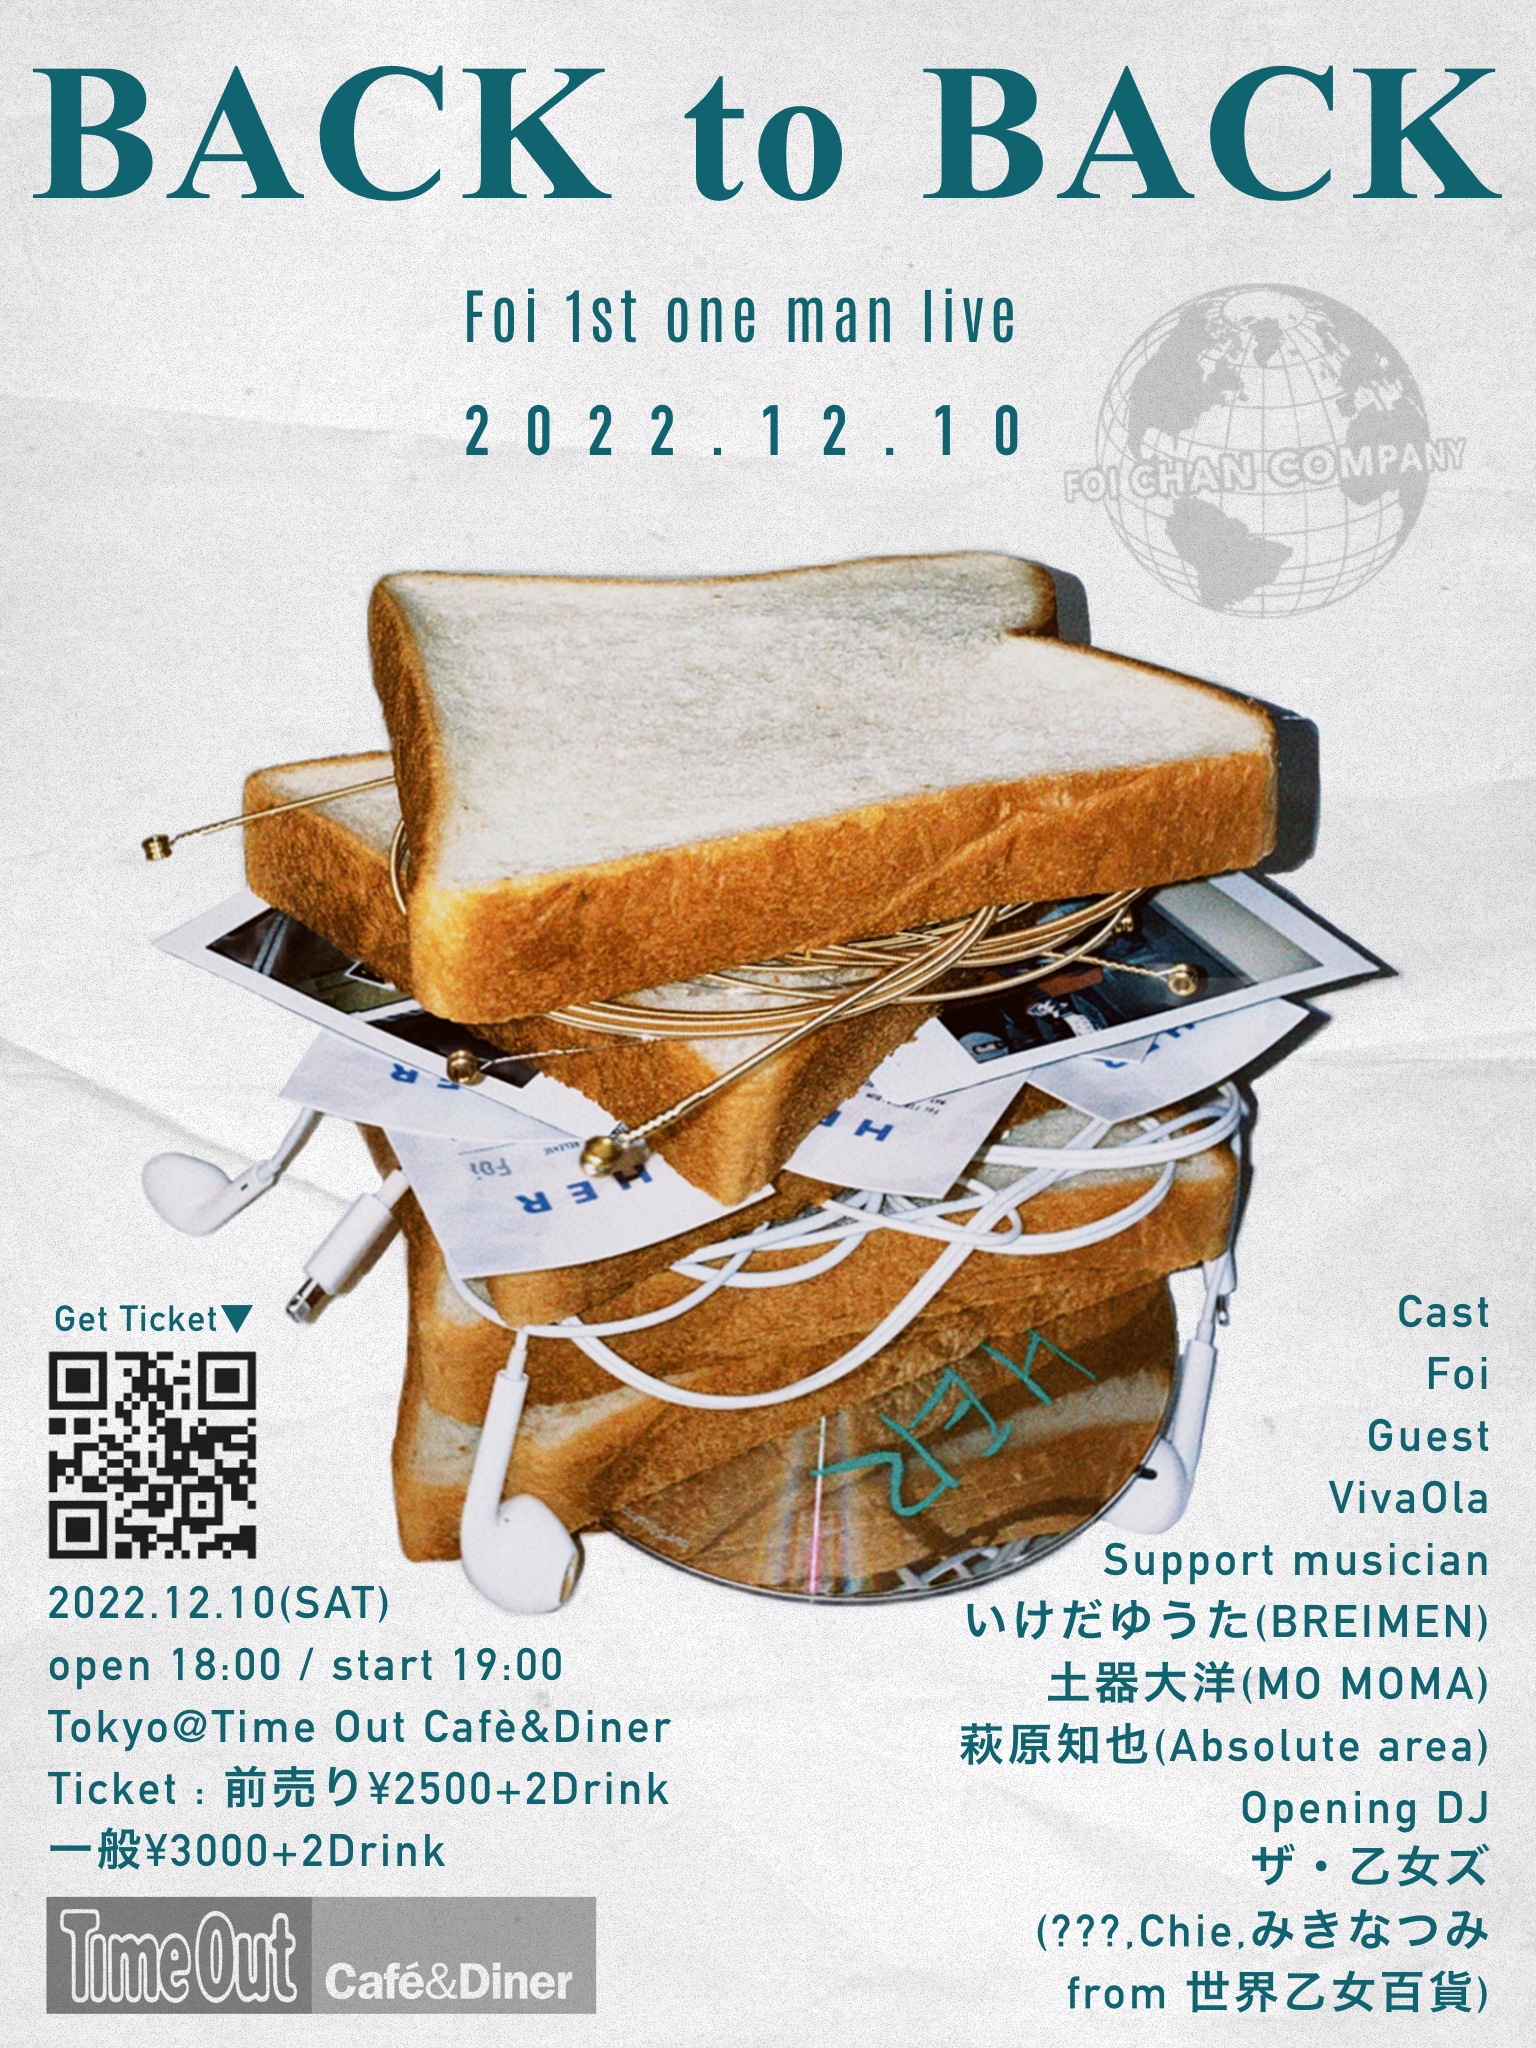 12/10 Foi 1st One Man Live 「BACK to BACK」 / TimeOut Café & Diner